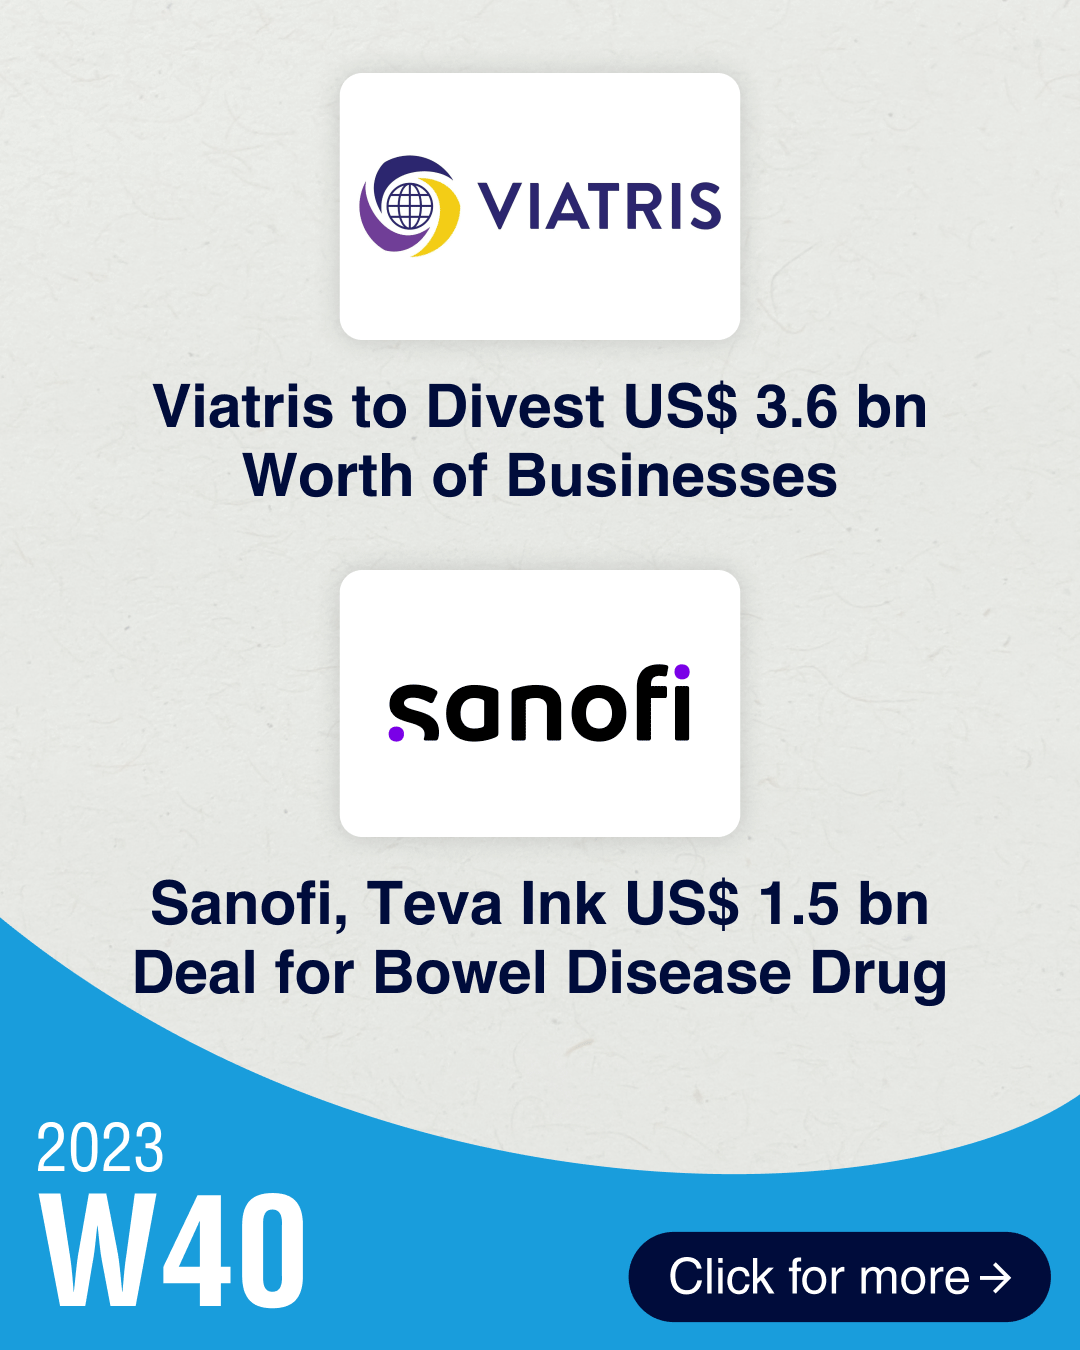 Viatris to divest US$ 3.6 billion worth of businesses; Sanofi, Teva in US$ 1.5 billion IBD deal